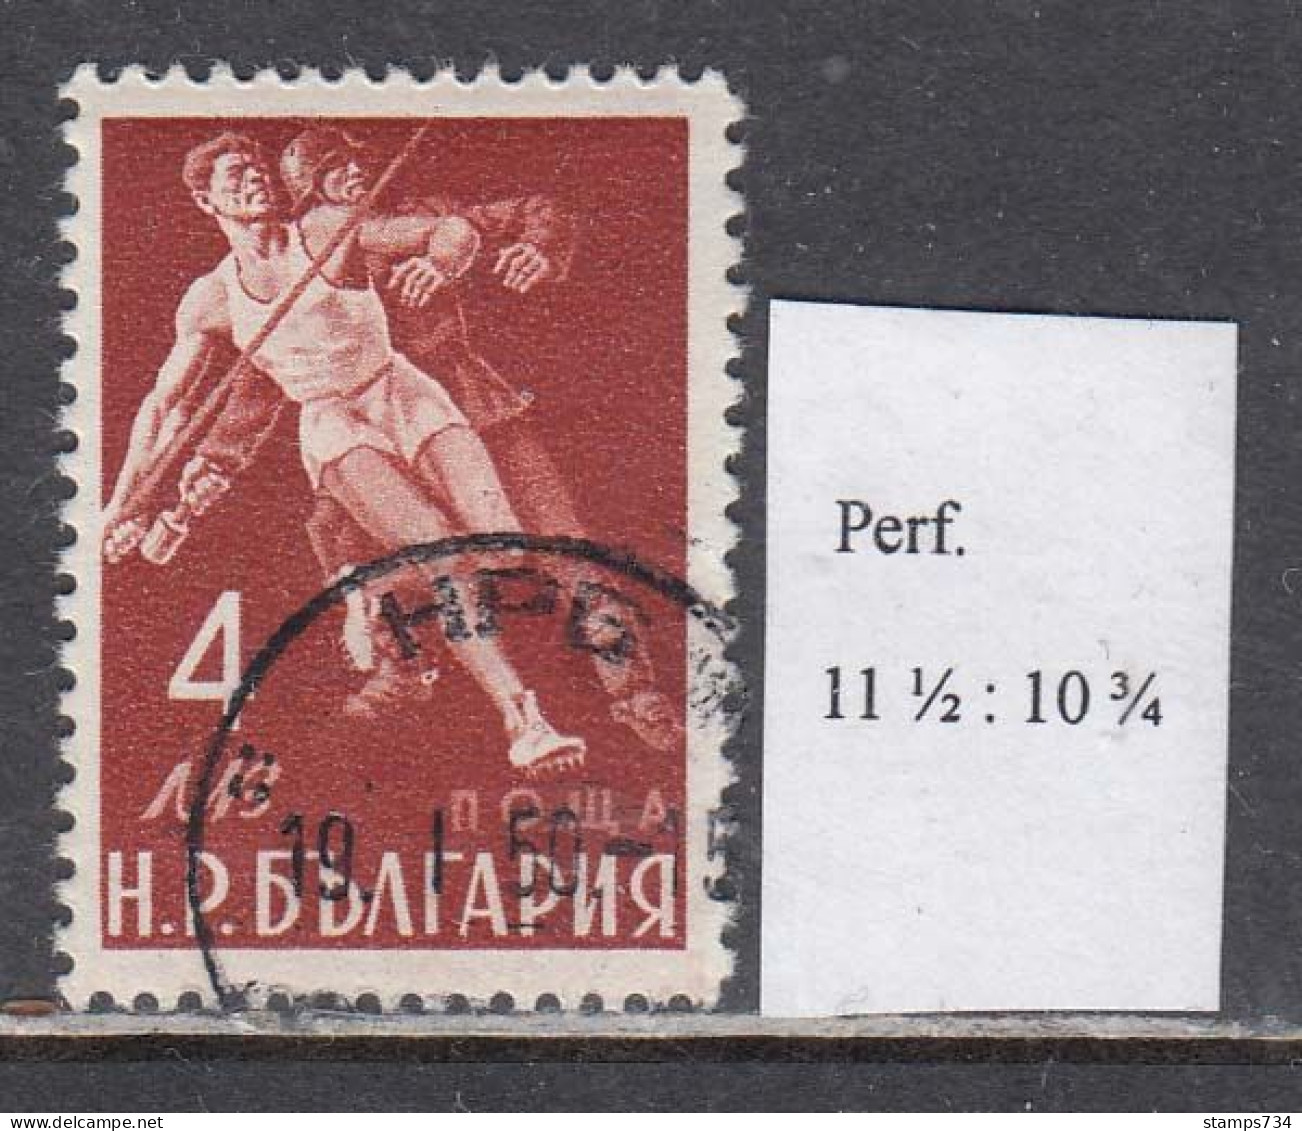 Bulgaria 1949 - Sport 4 Lev, Mi-Nr. 704, Rare Preforation 11 1/2: 10 3/4, Used - Gebraucht